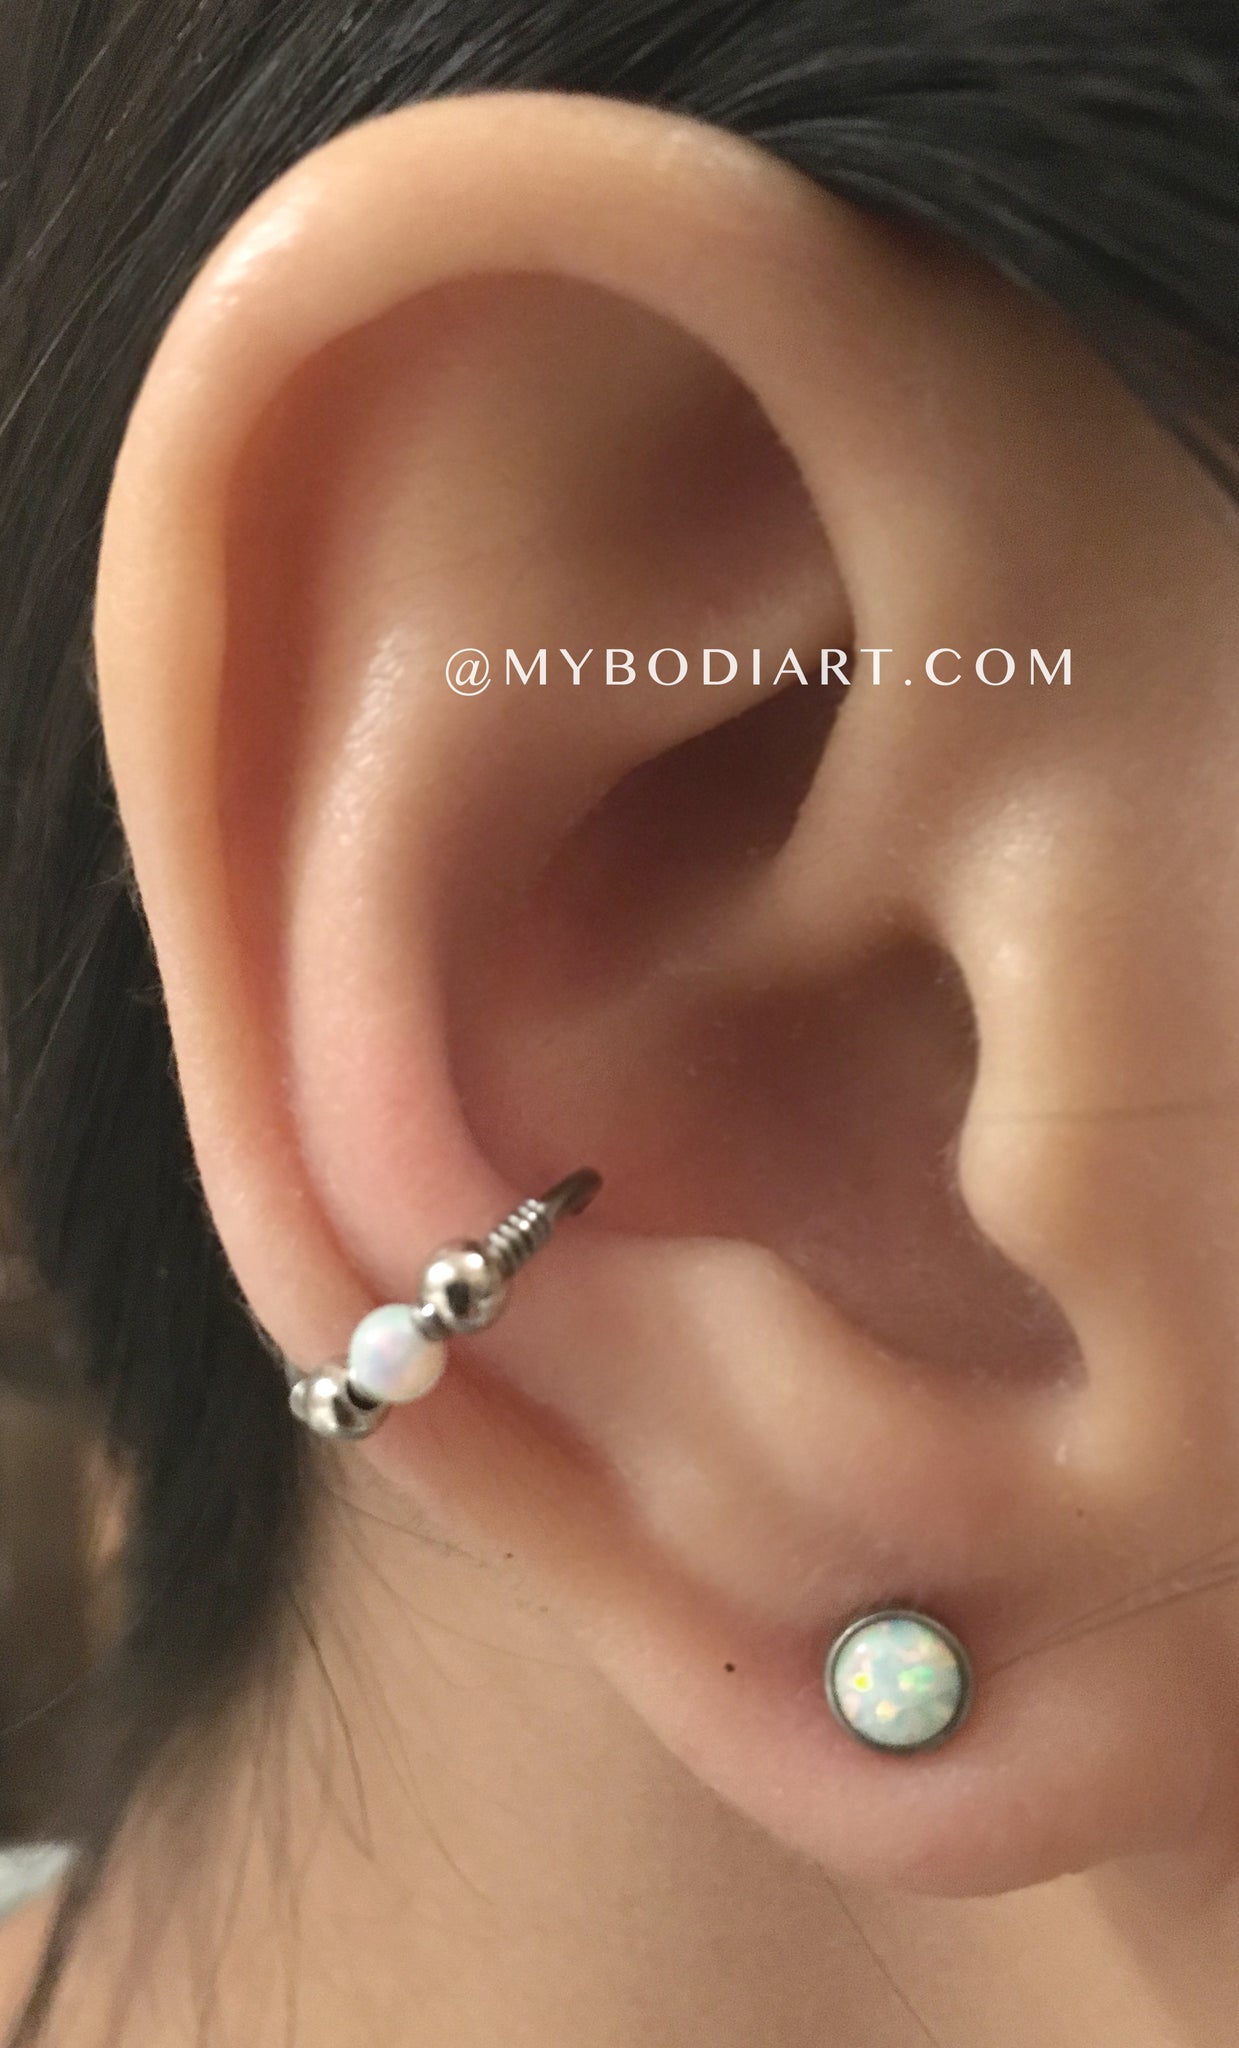 Simple Ear Piercing Ideas for Girl's - Andromeda Opal Conch Ring Hoop Earring - www.MyBodiArt.com